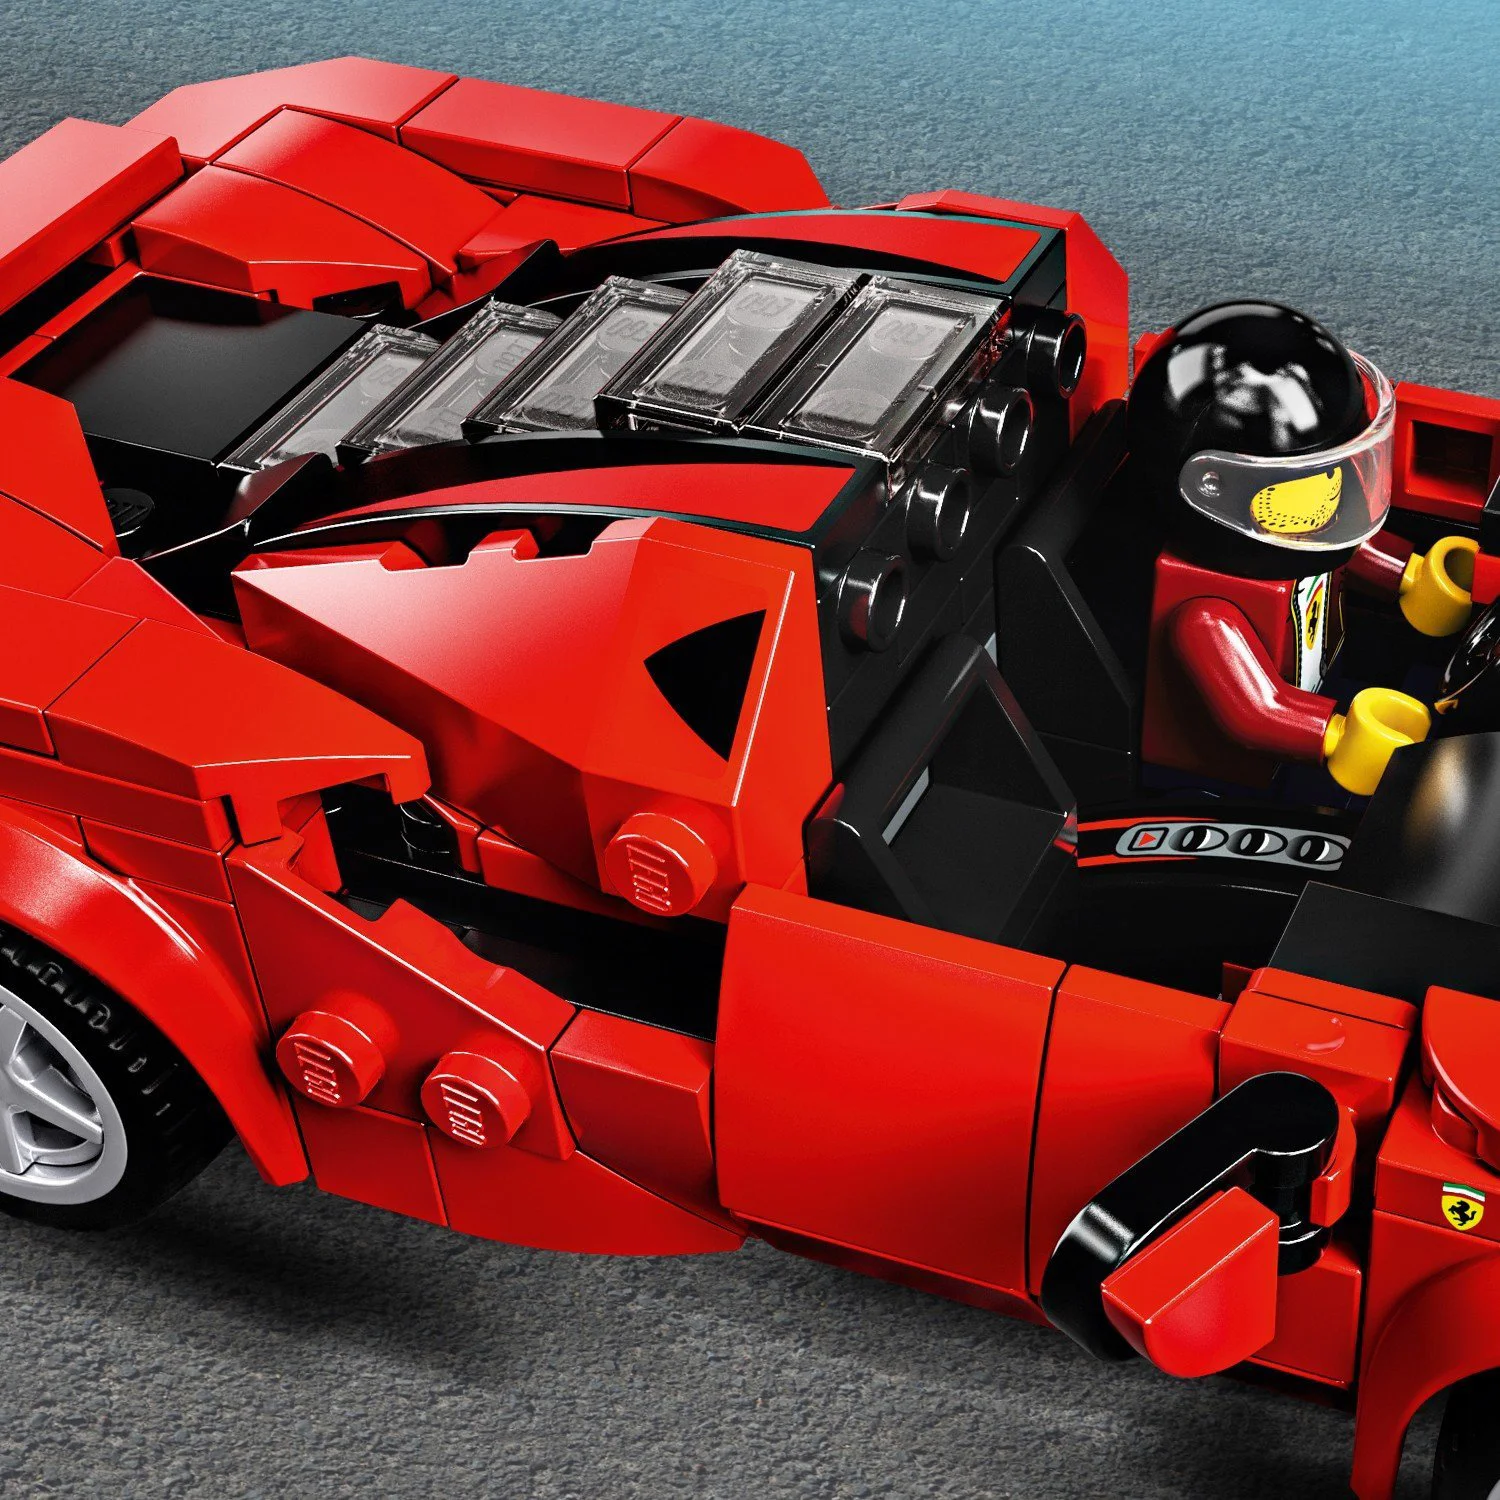 Lego Speed Champions Ferrari F8 Tributo